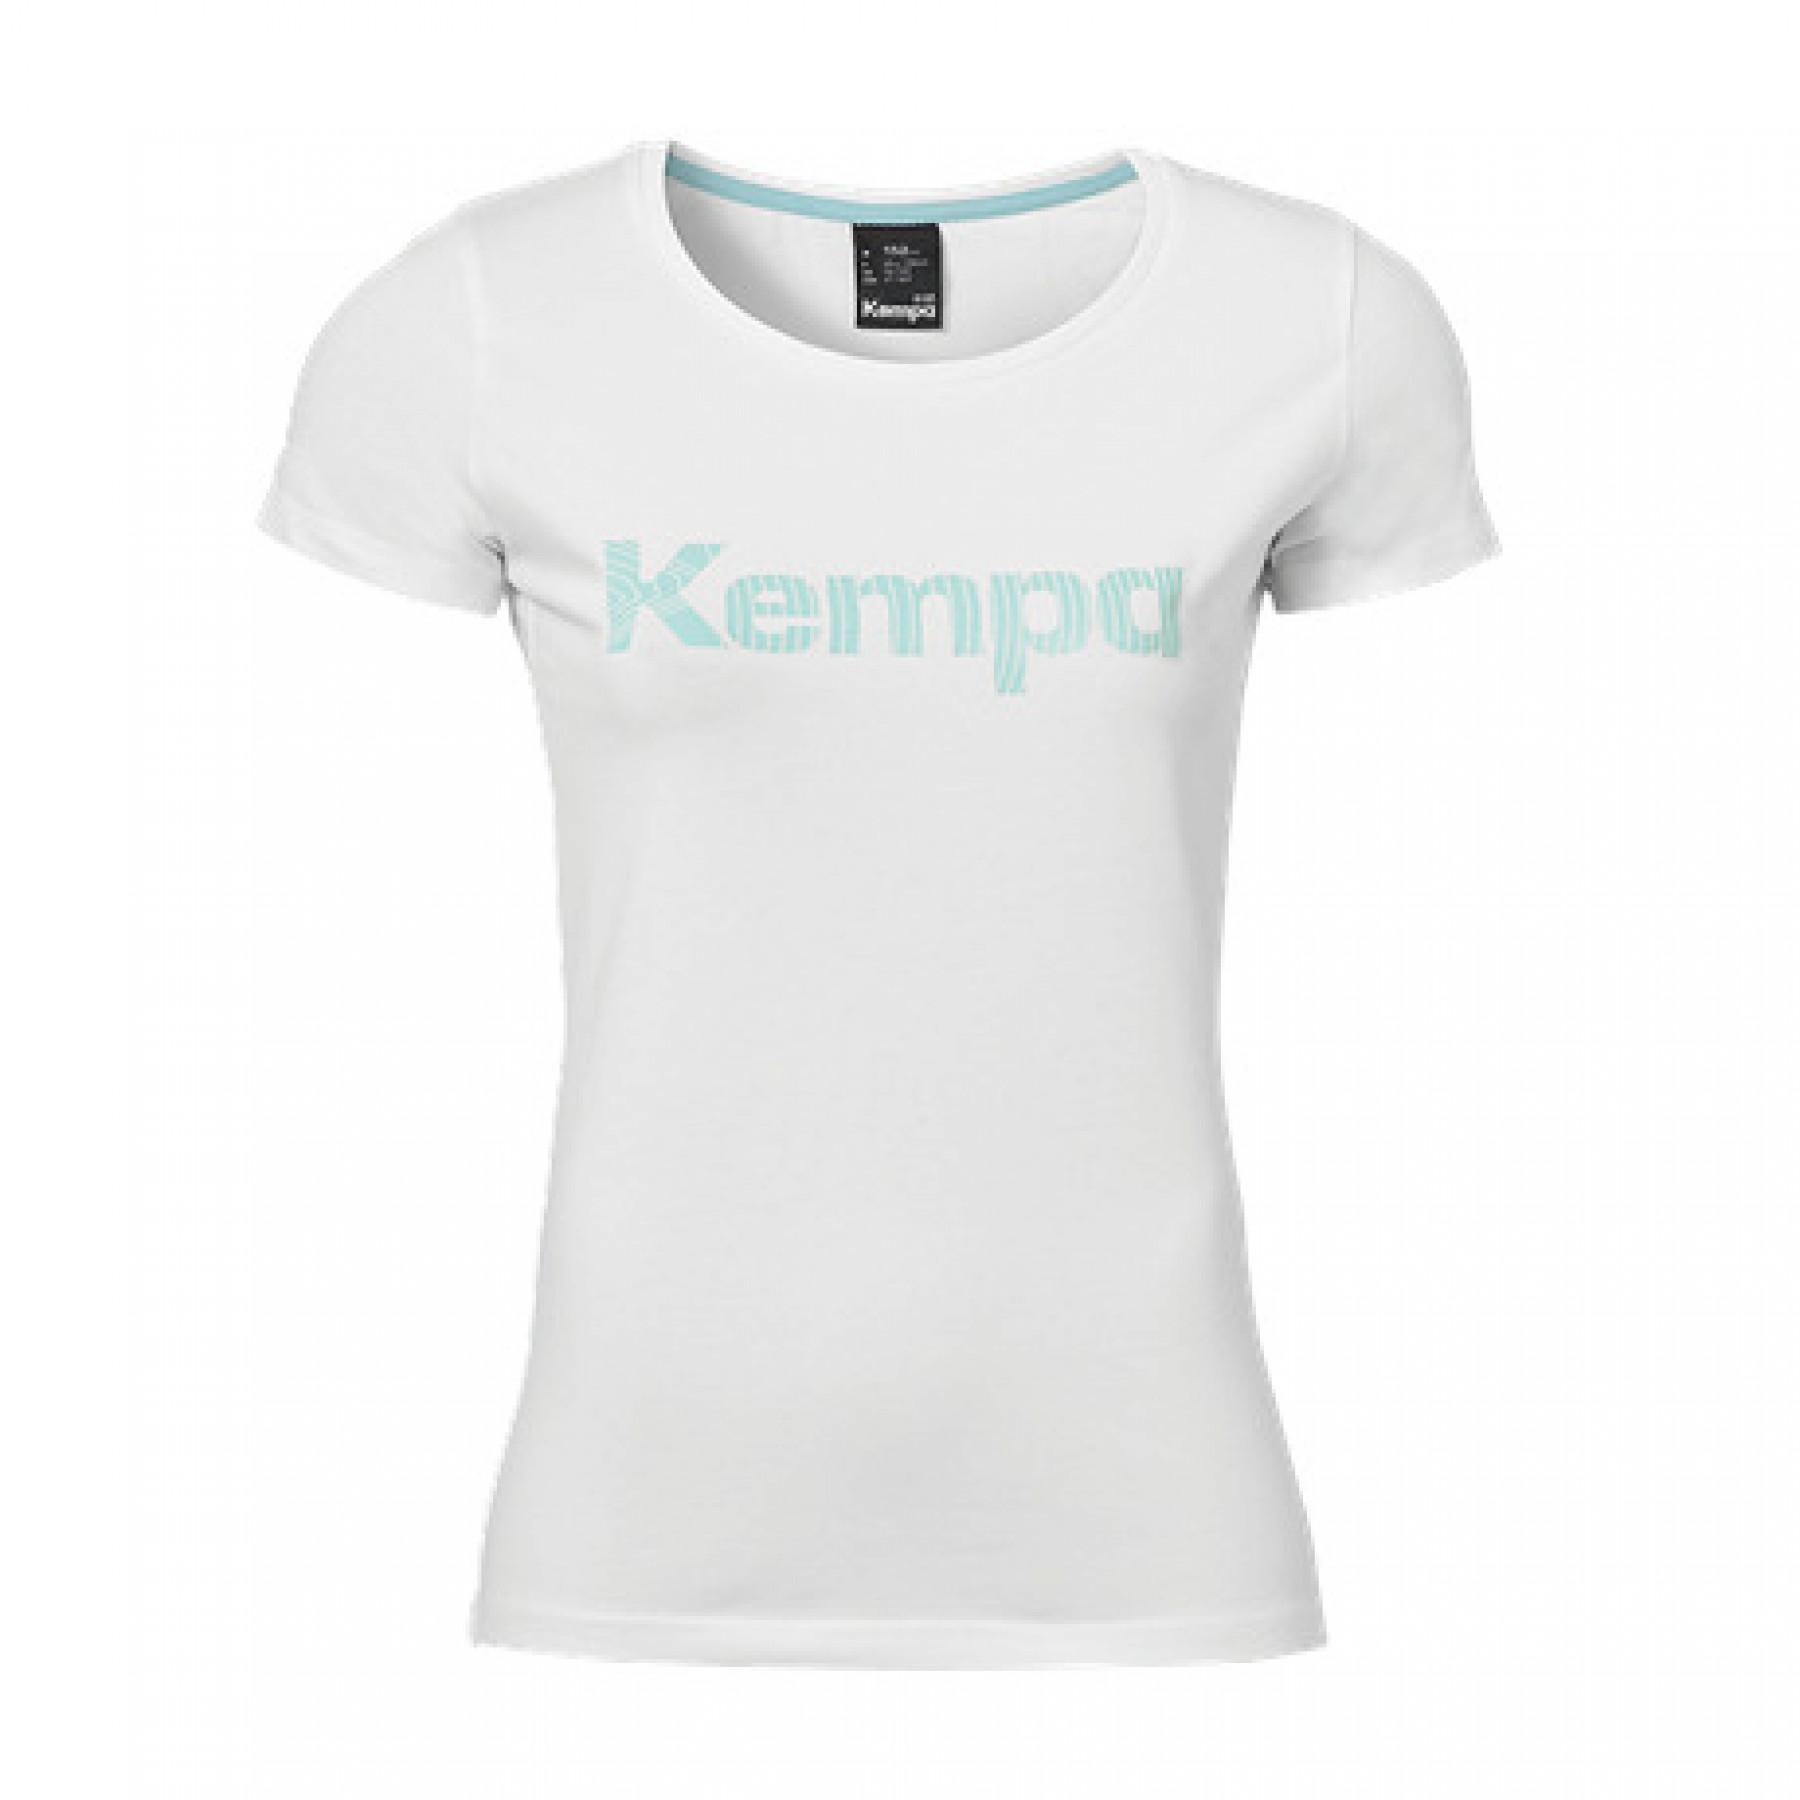 Dames-T-shirt Kempa Graphic